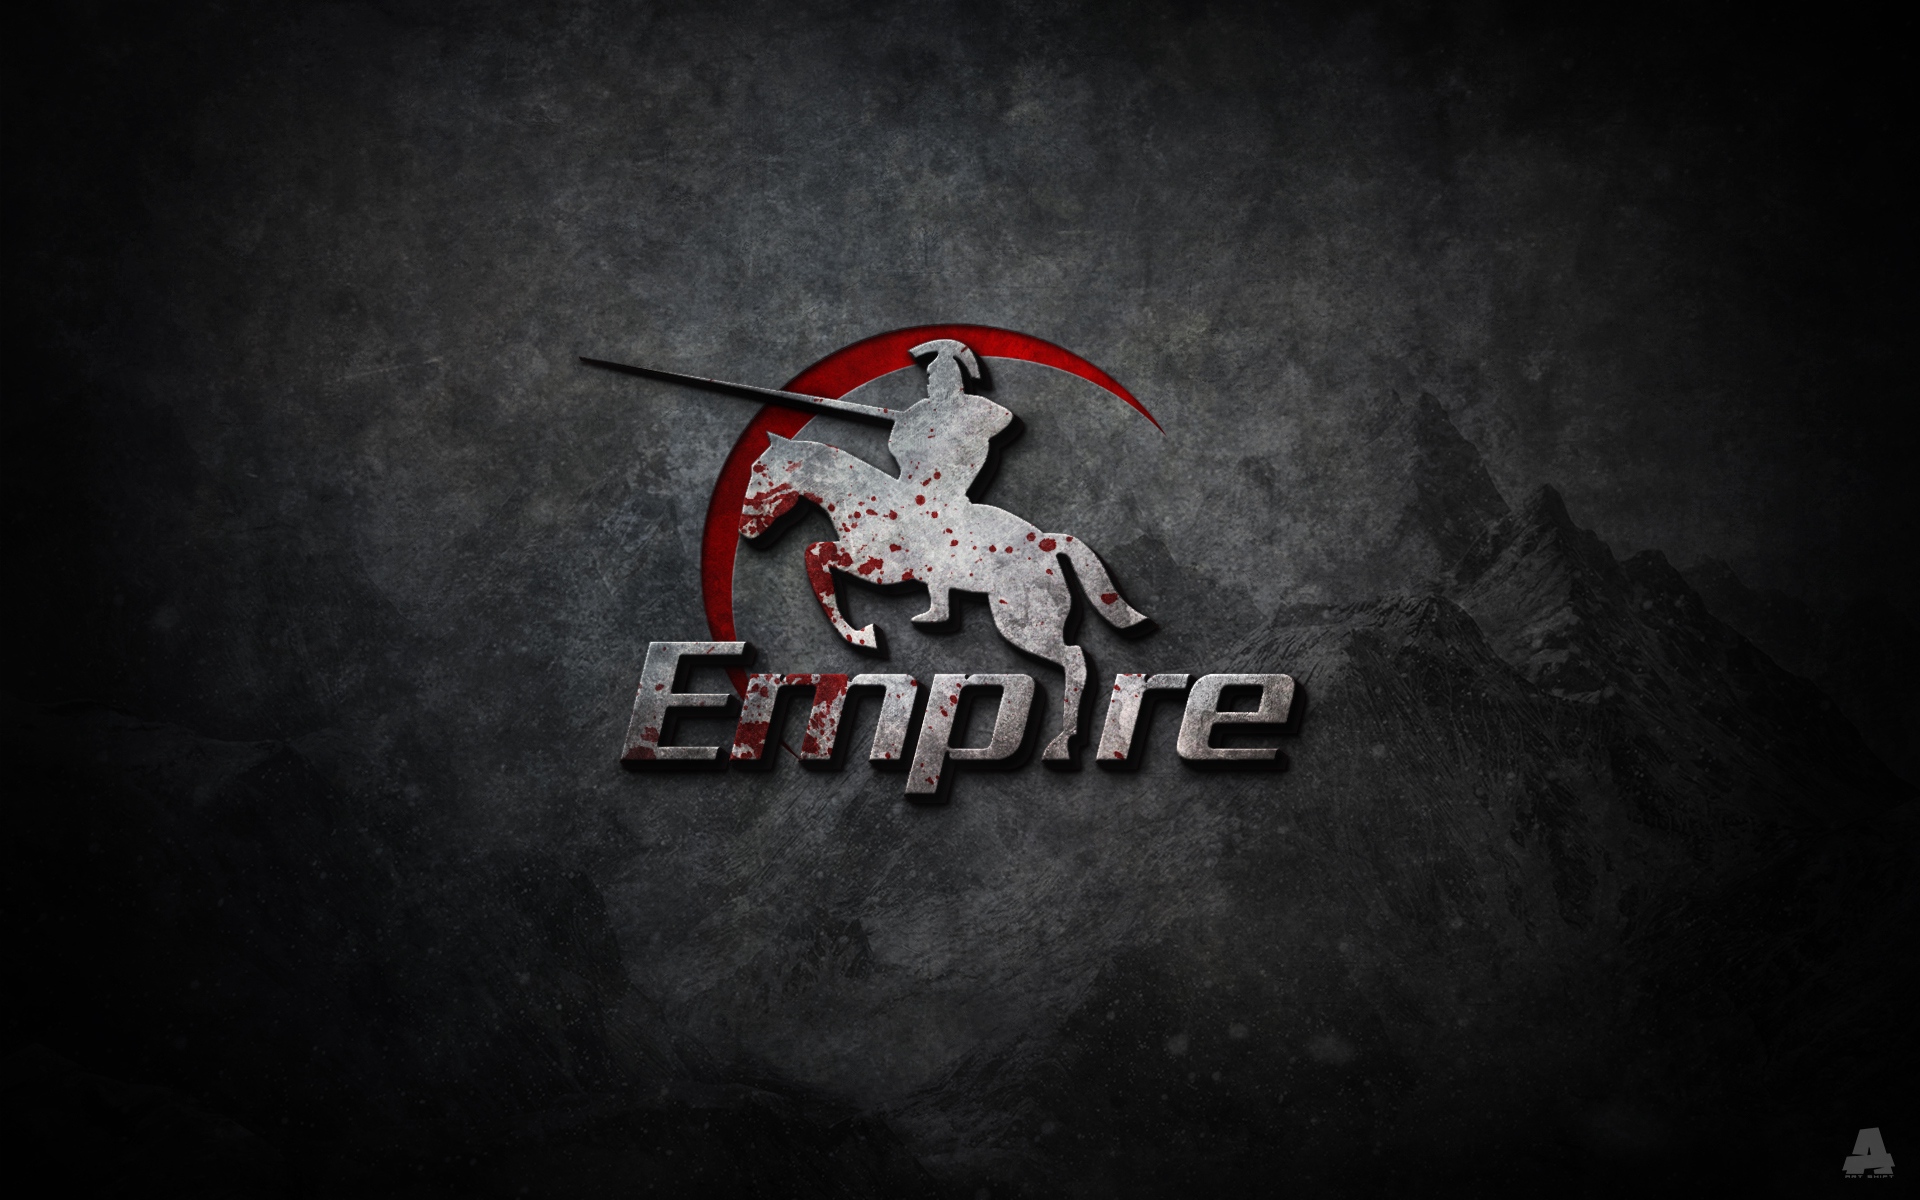 Team Empire Dota Cyber Sport Knight Stock Photos Image